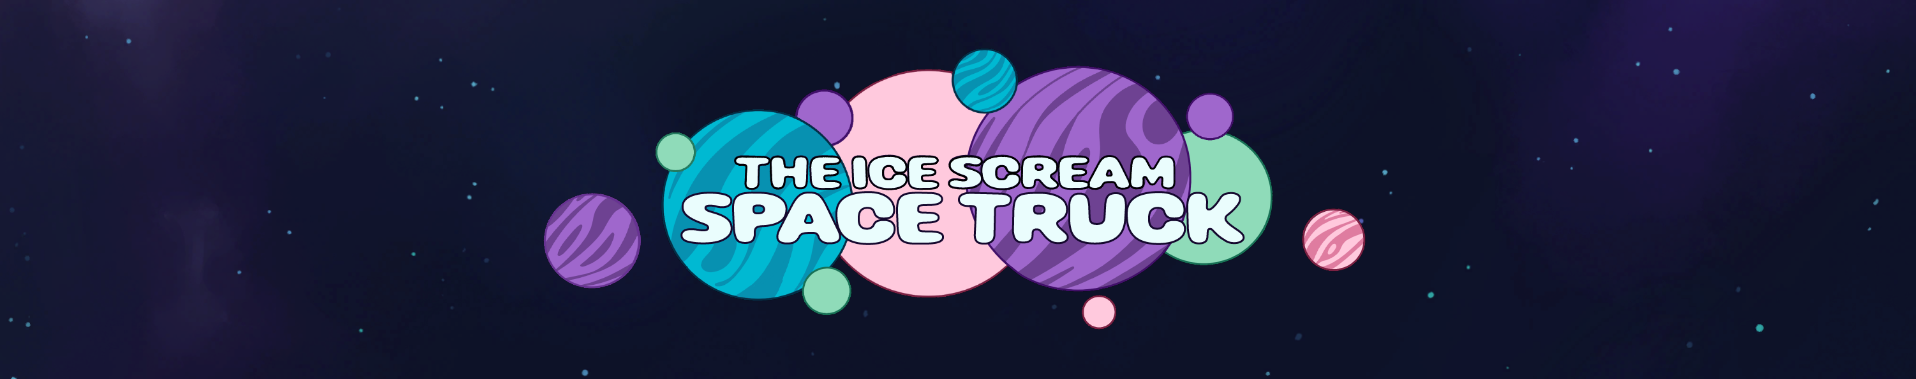 The Ice Scream Space Truck